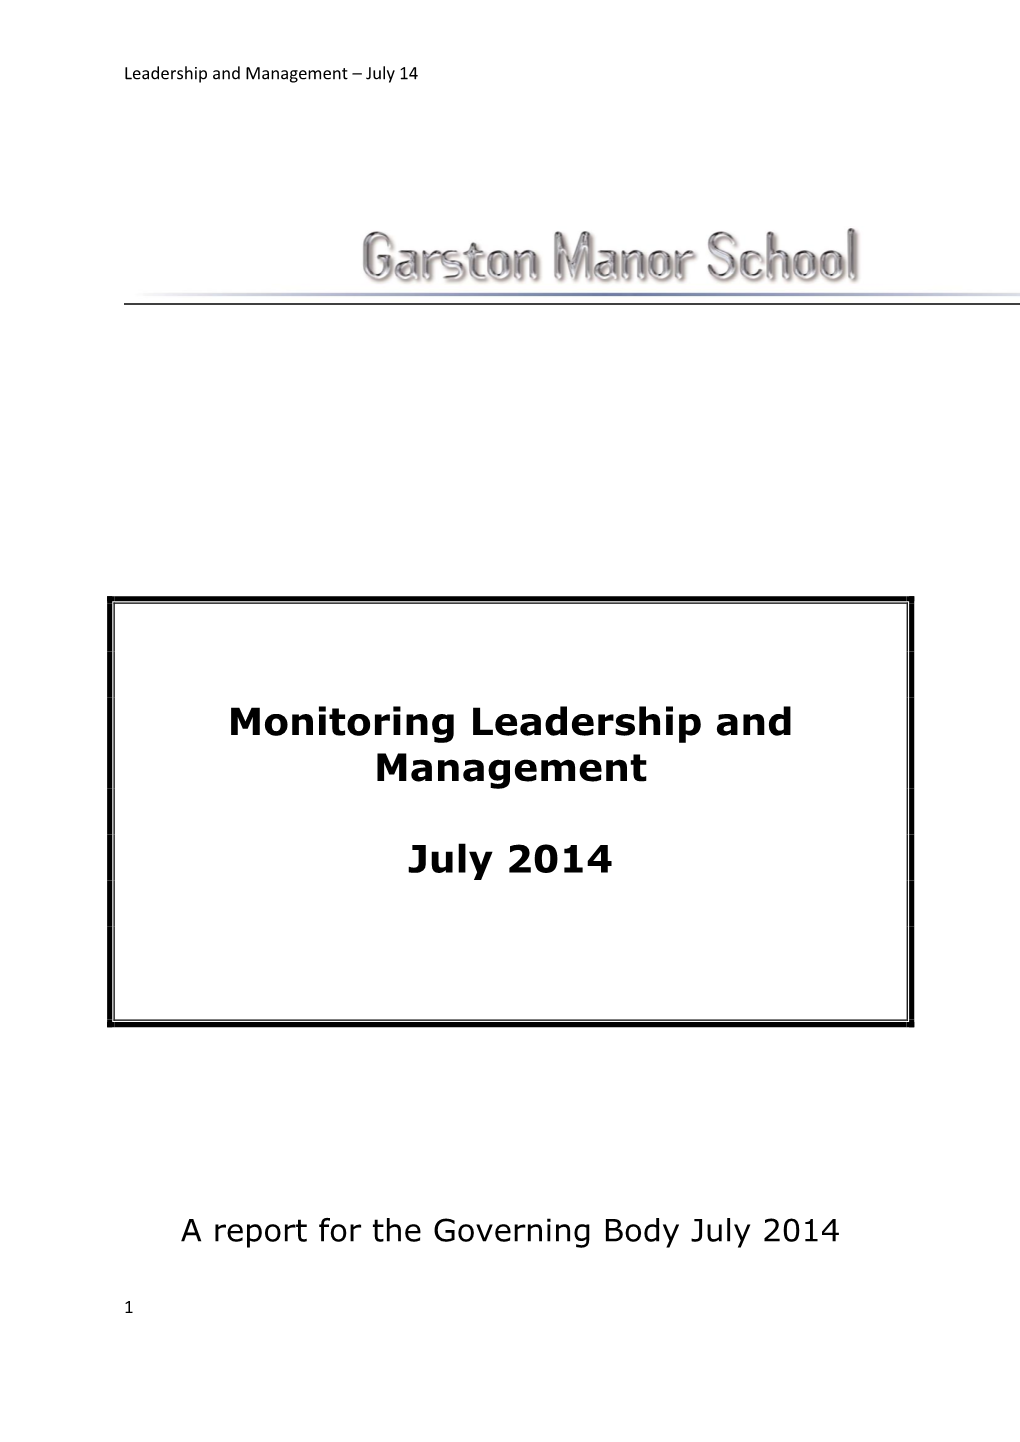 Monitoring Leadership and Management July 2014